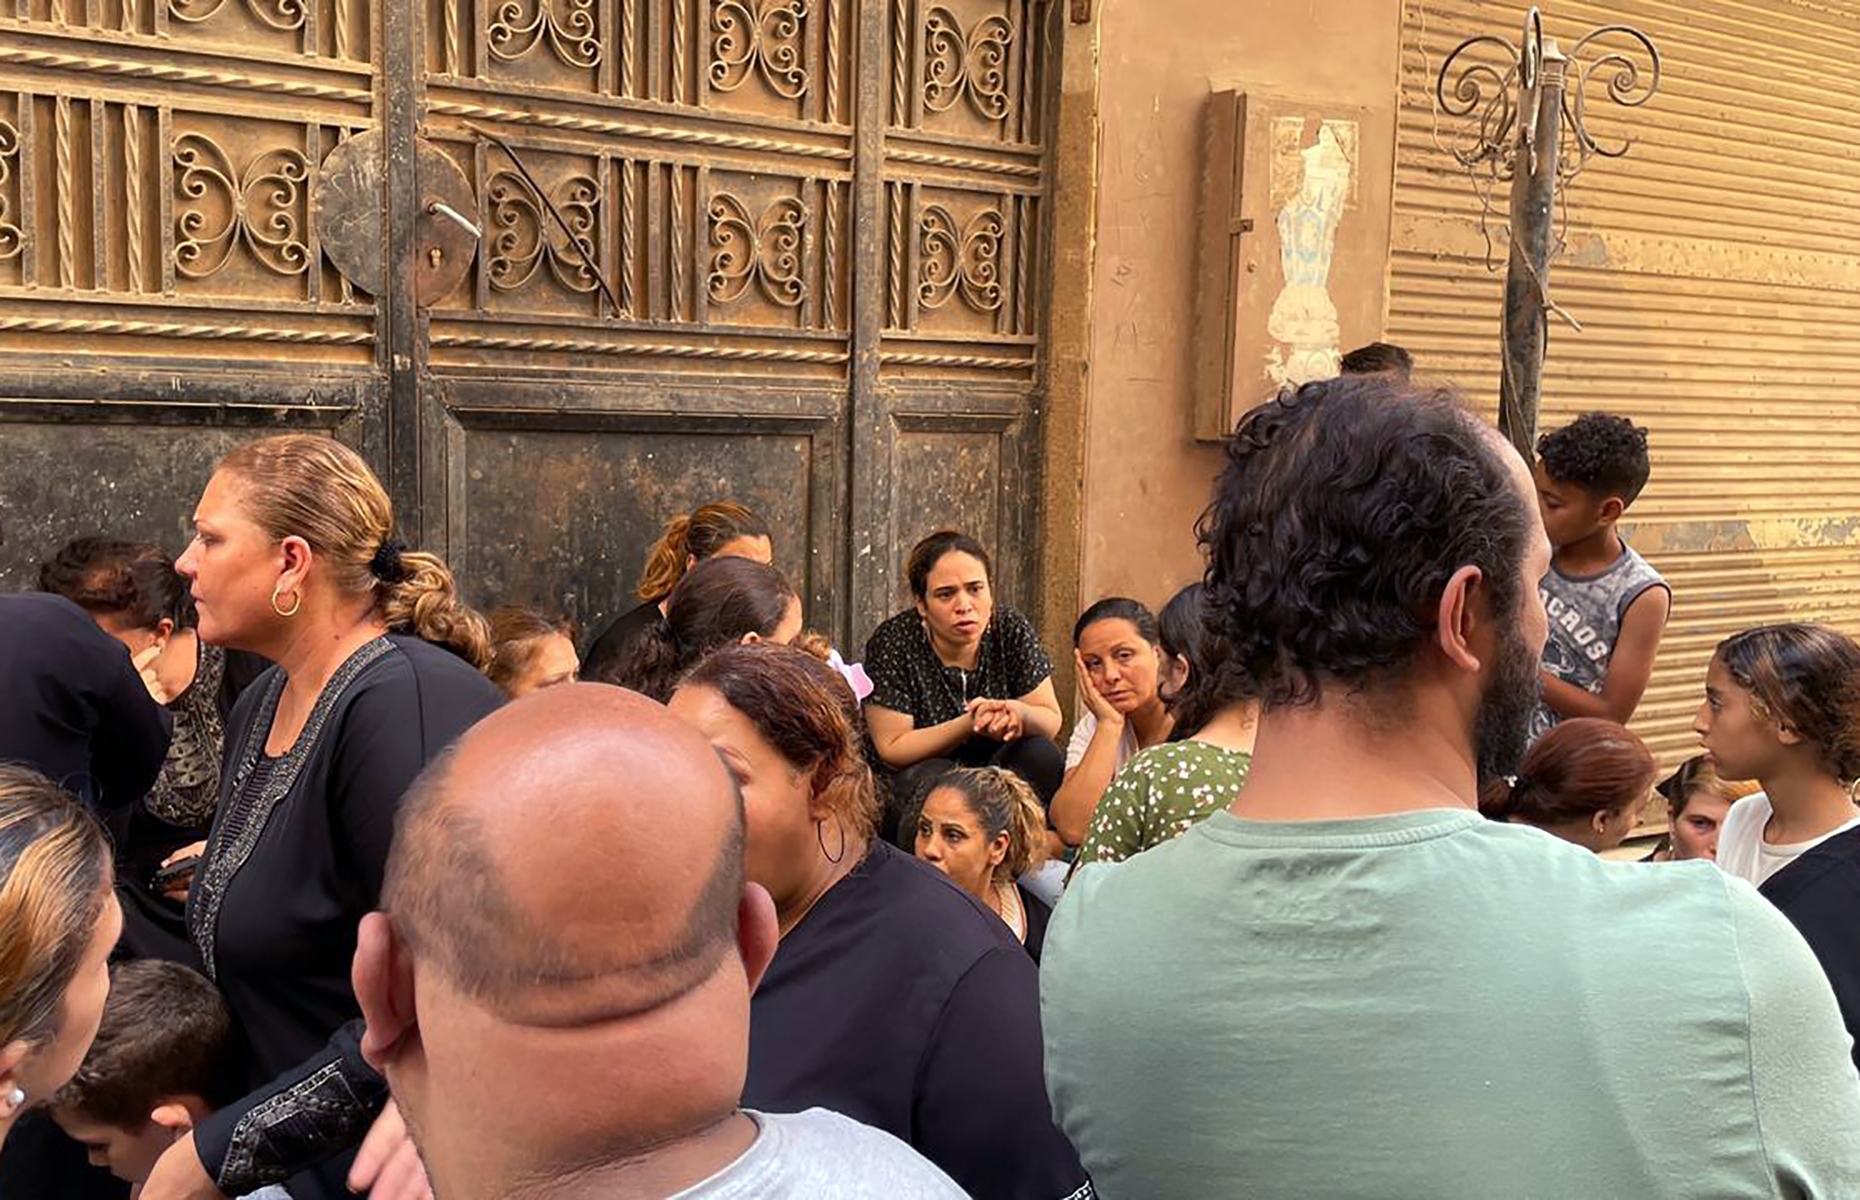 Fire at Cairo Coptic church kills 41, including 15 children - WTOP